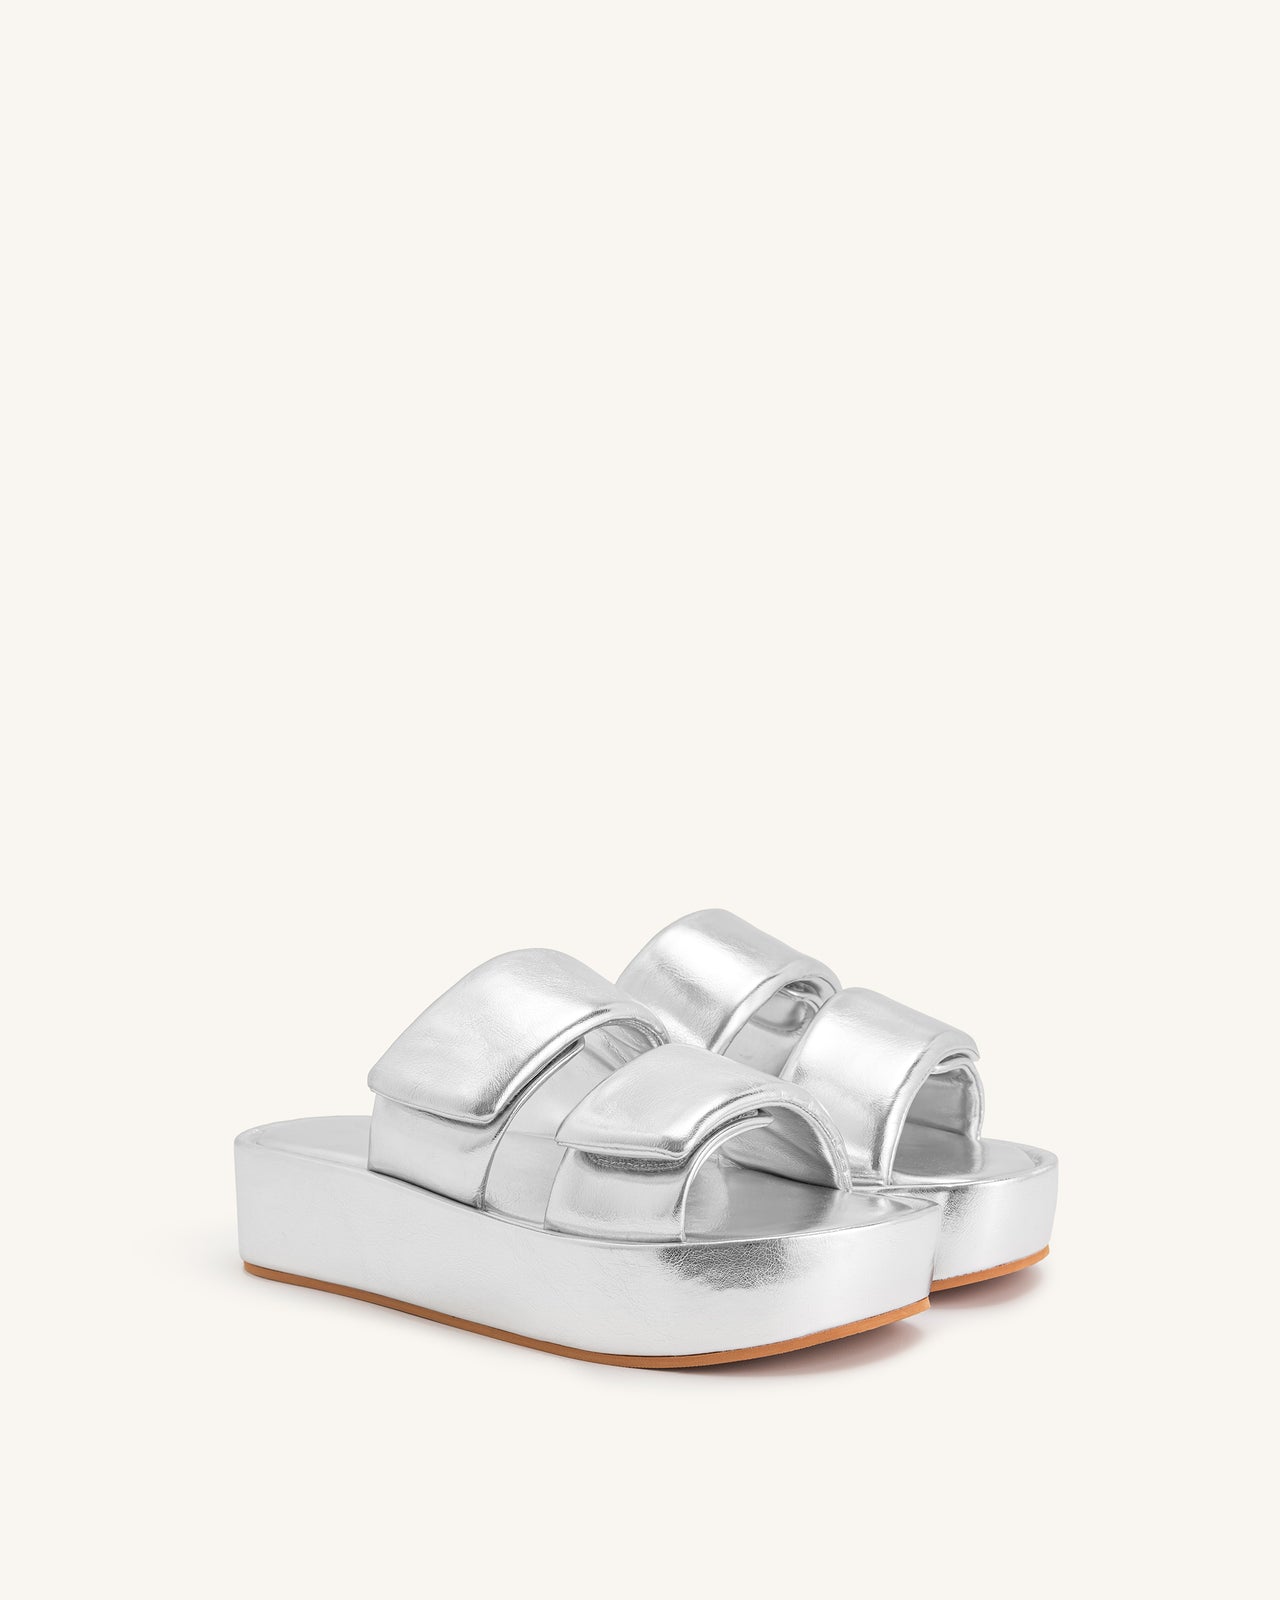 JW PEI, Shoes, Nwt Jw Pei White Slide Sandals